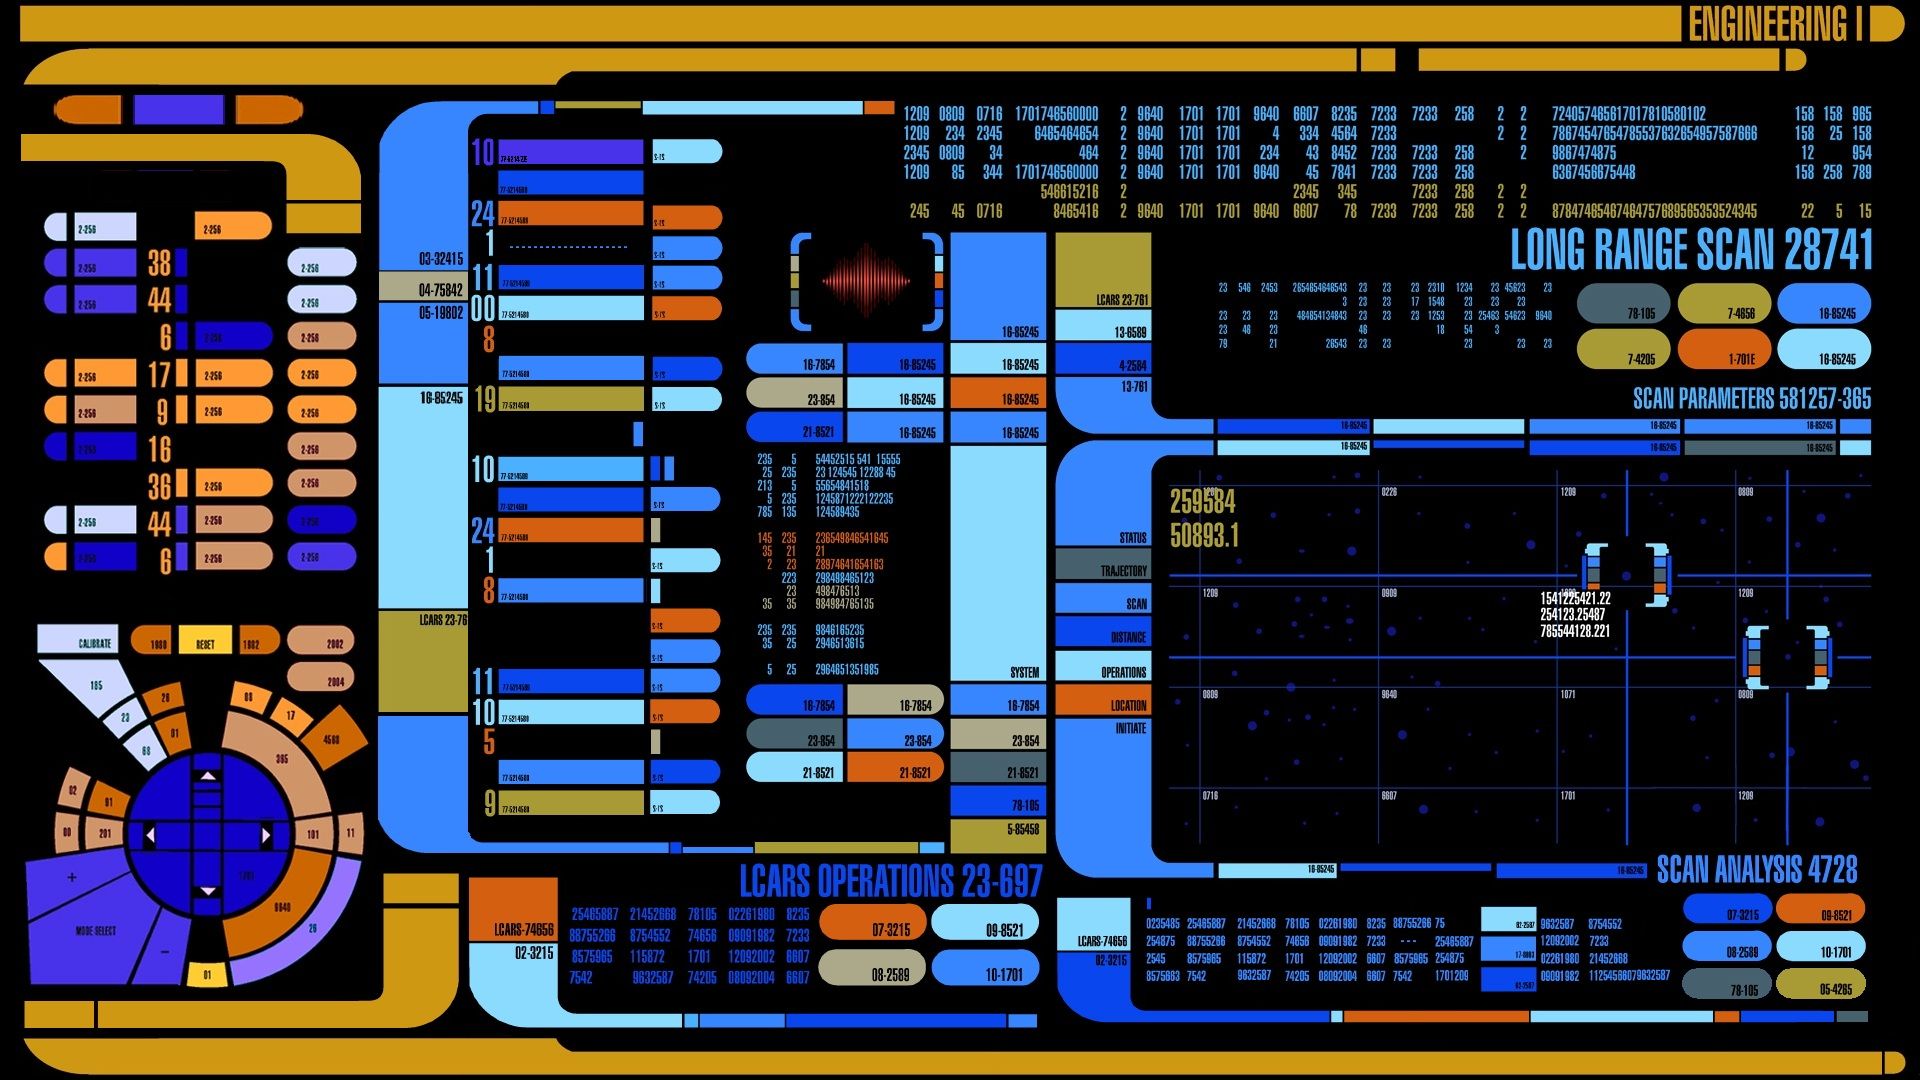 Star Trek Engineering Console HD Wallpaper 1920x1080 ID49348